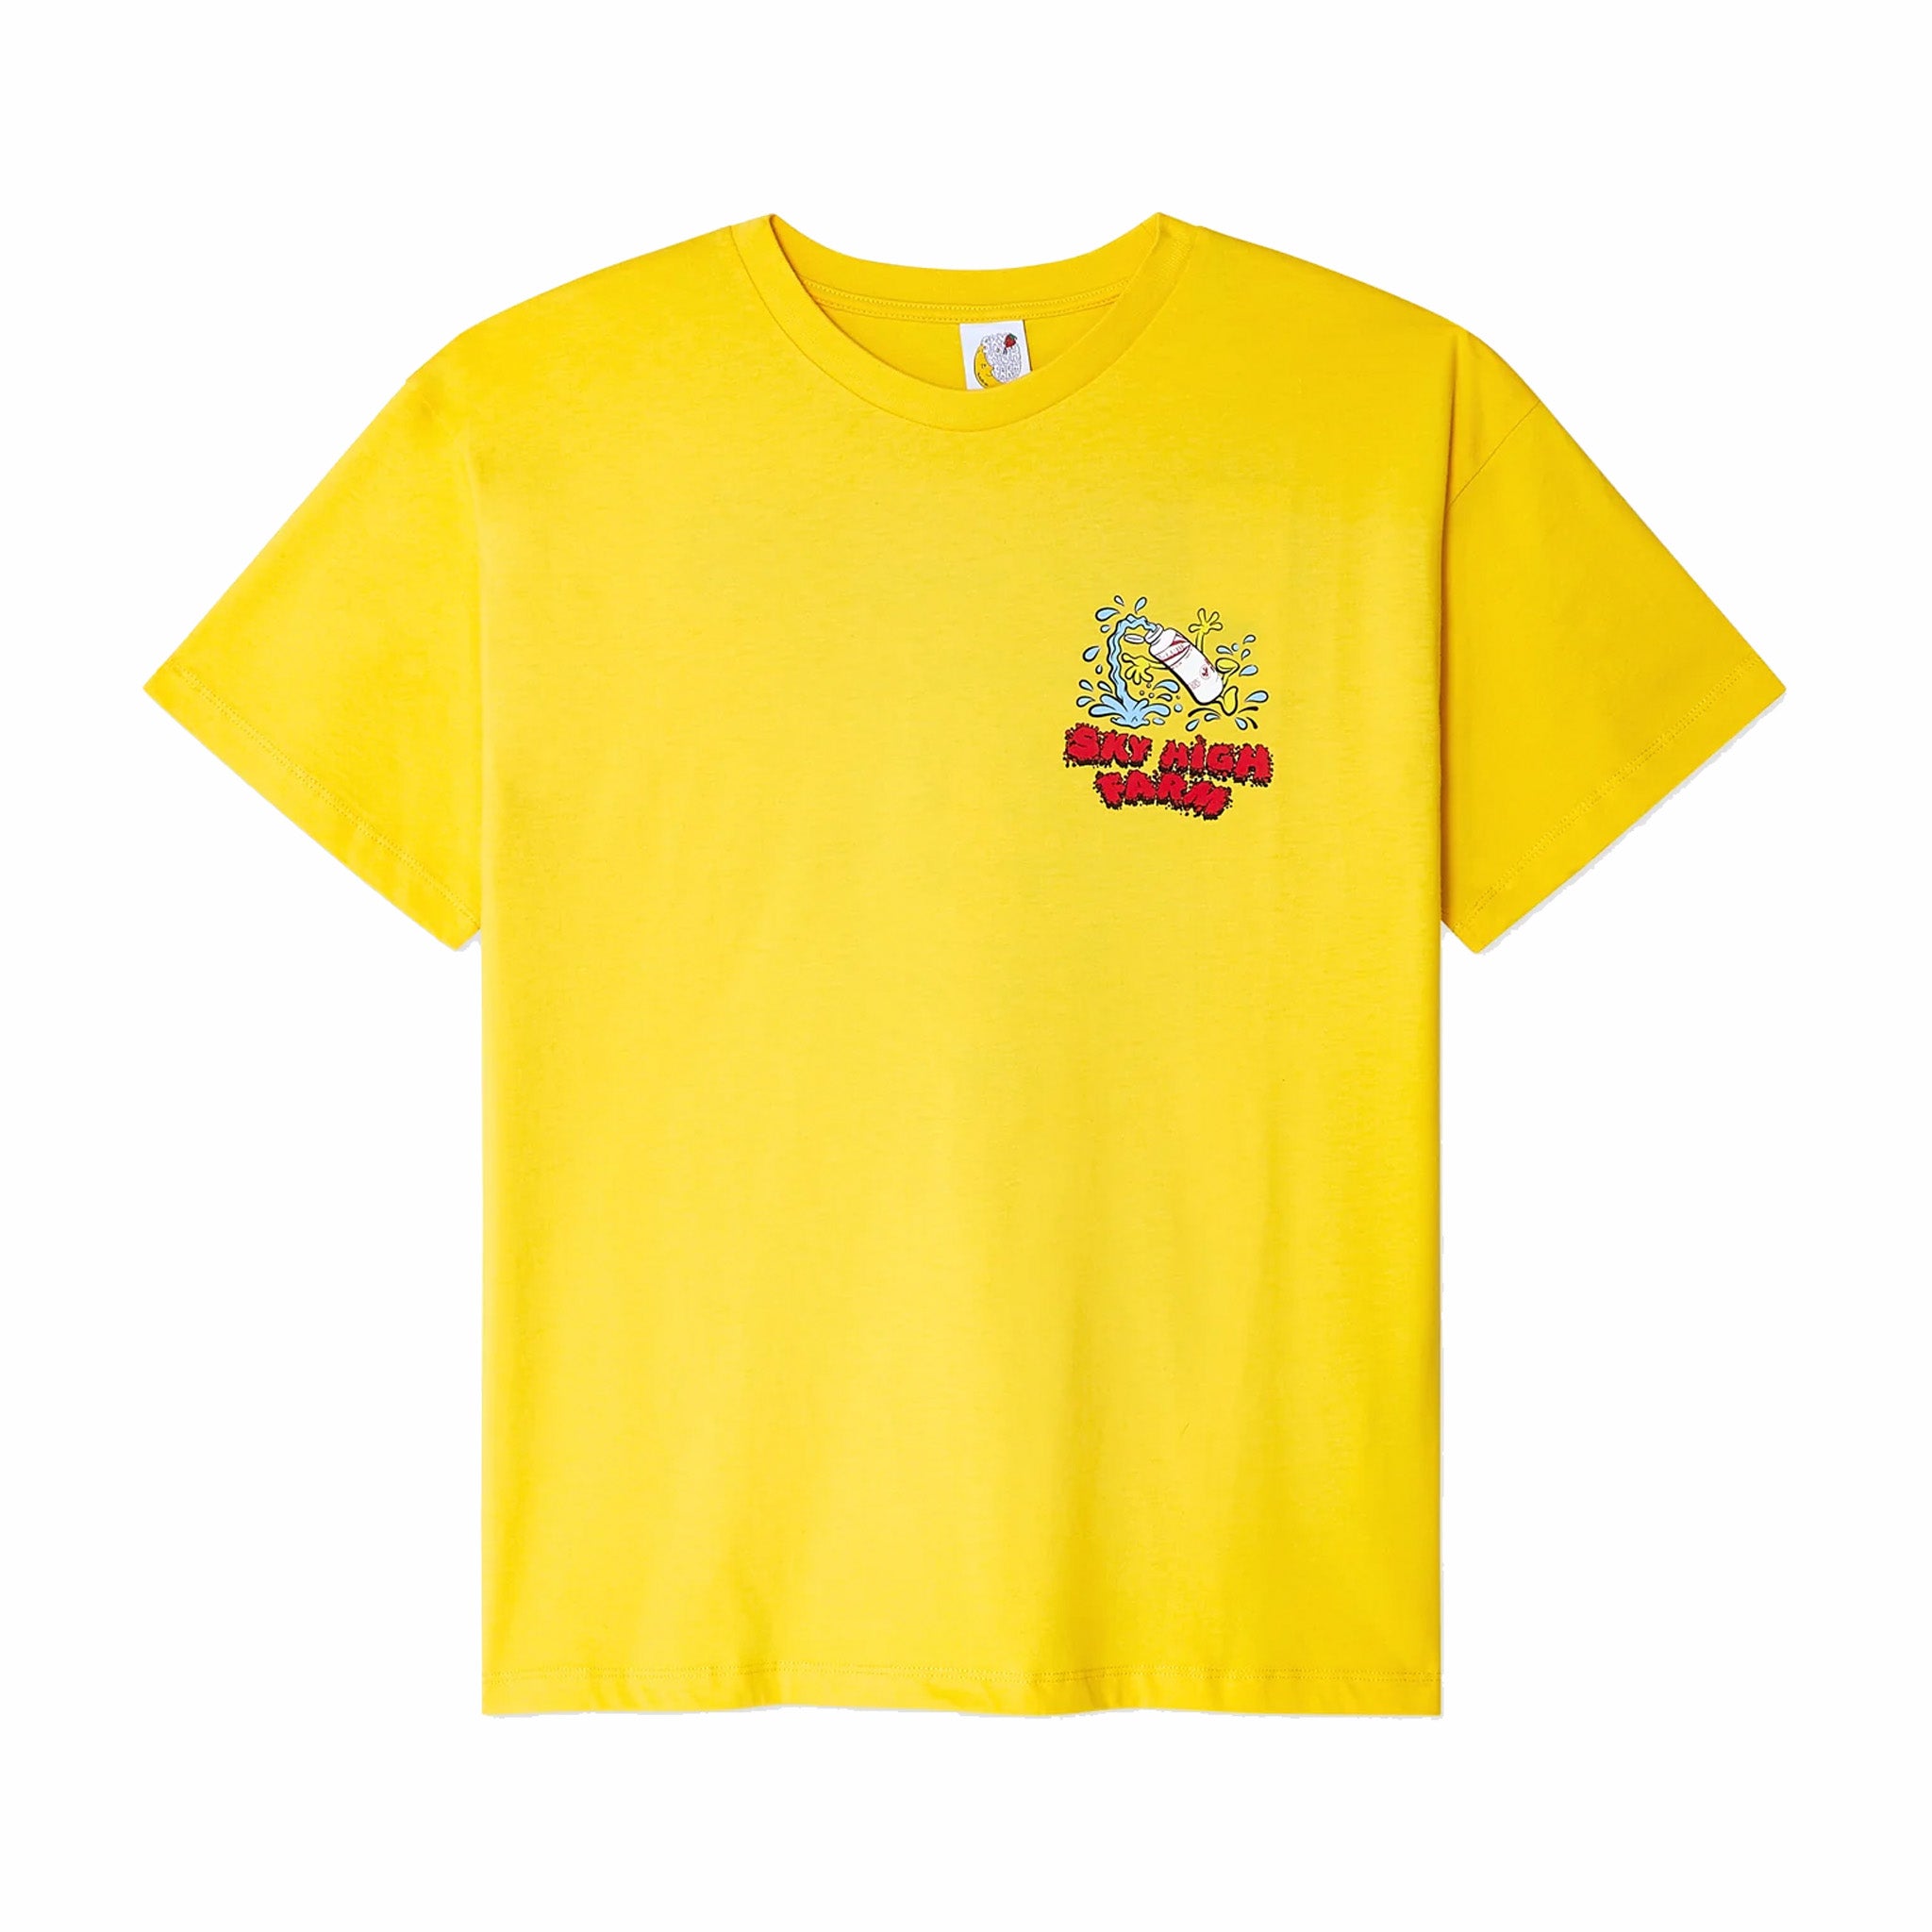 Sky High Farm Workwear Slippery When Wet T-Shirt (Yellow) - August Shop